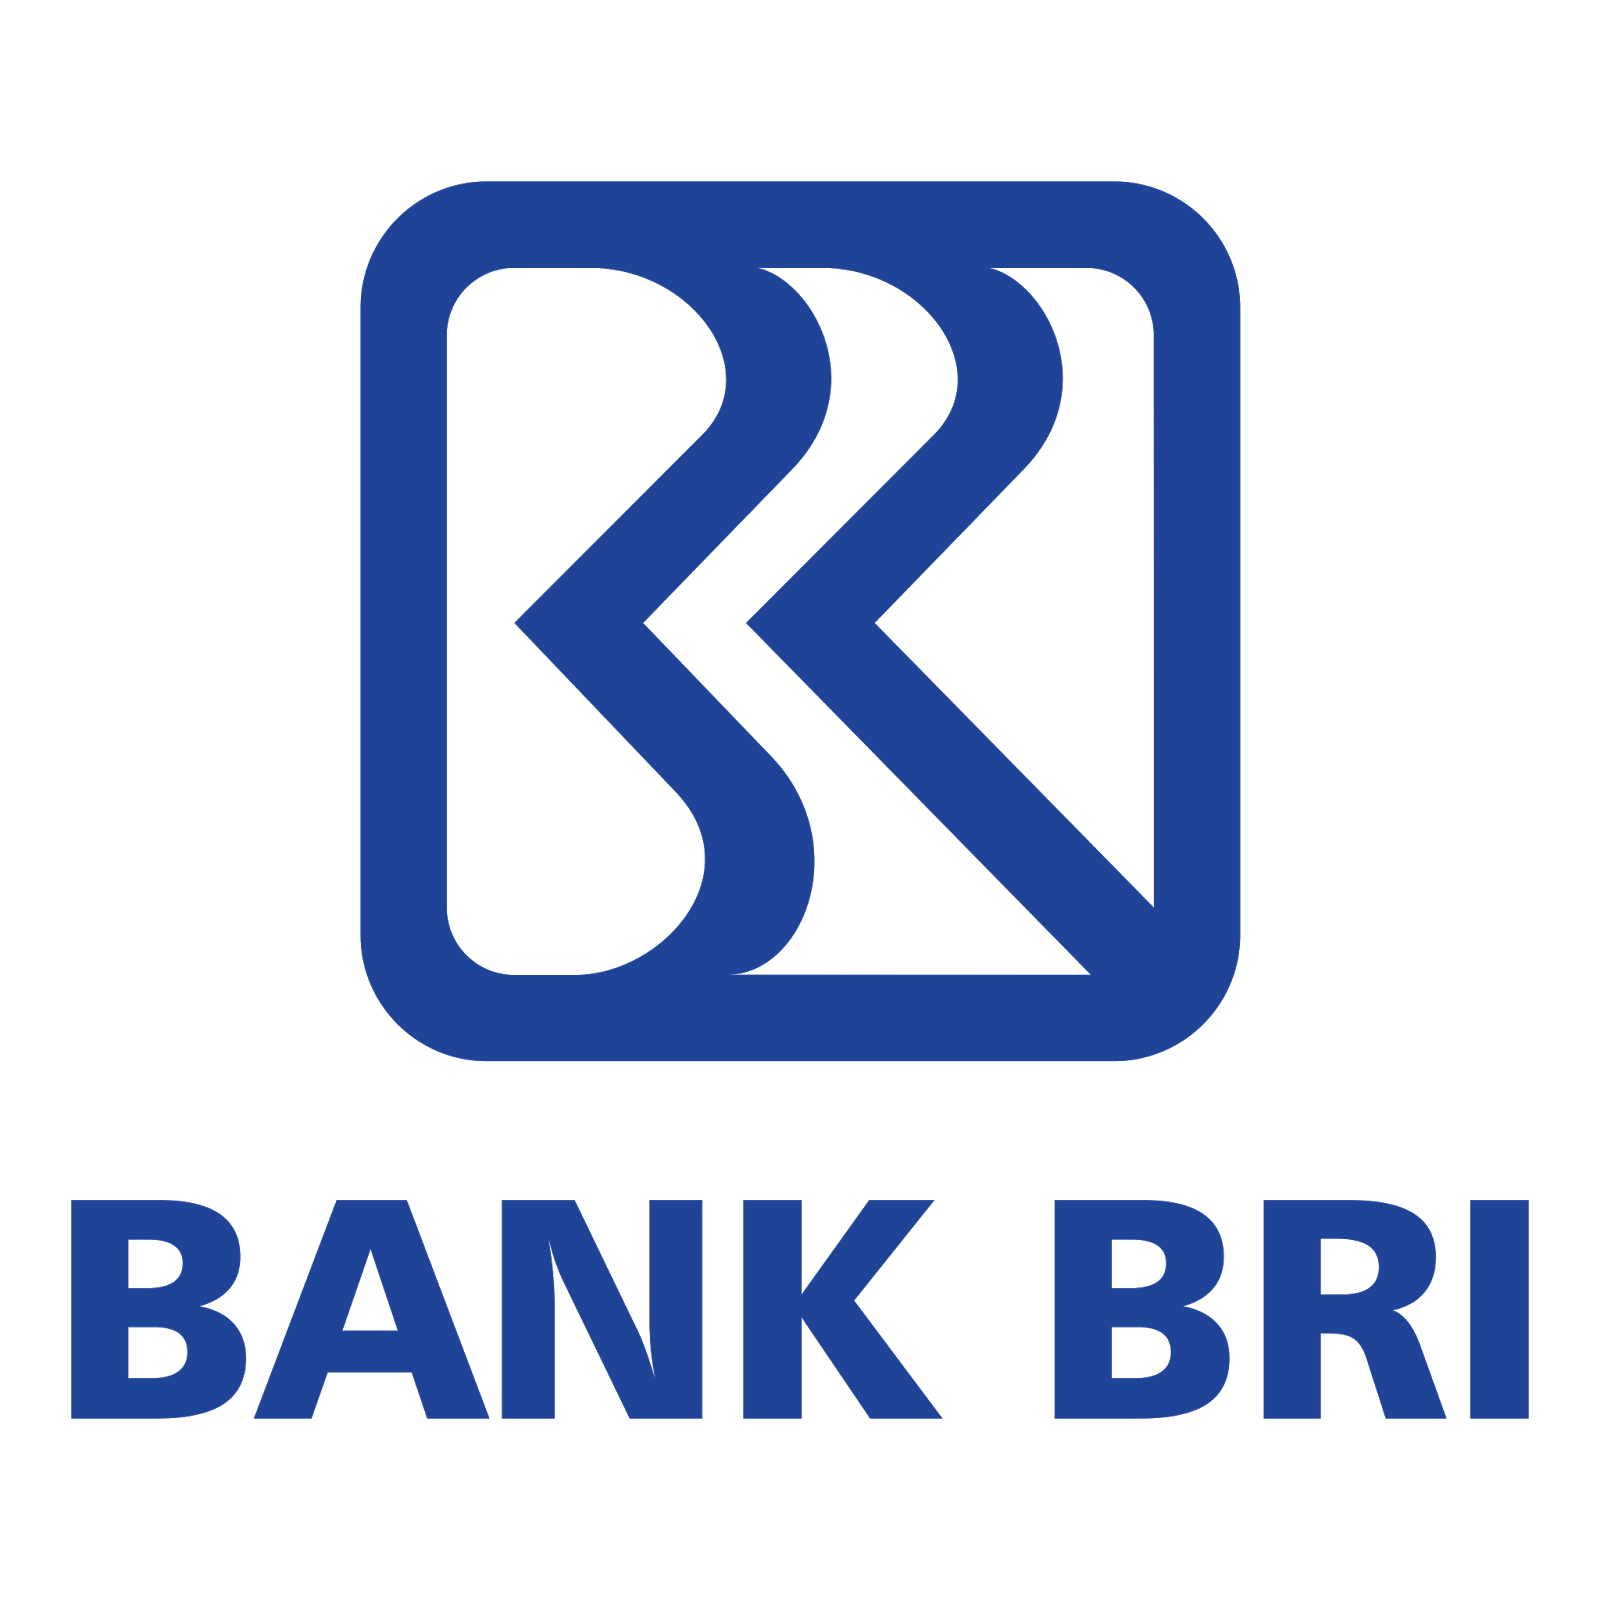 kisspng-logo-bank-rakyat-indonesia-vector-graphics-brand-p-logo-bank-all-vector-file-coreldraw-free-download-5b6c1a04d3d7b7.6322267715338112048677